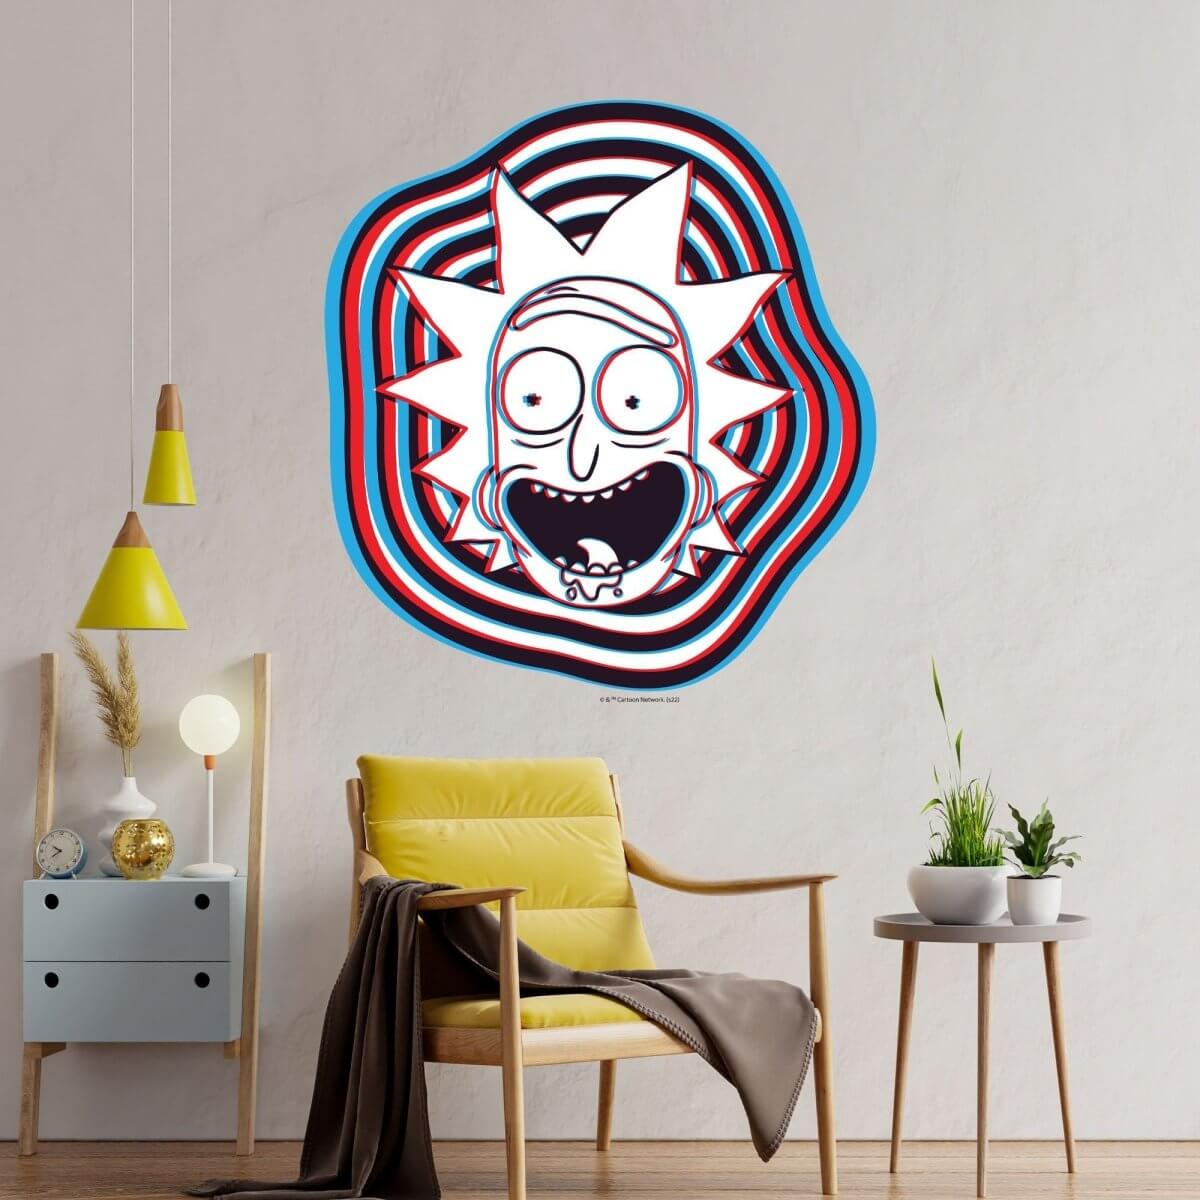 Kismet Decals Rick & Morty Vaporwave Sci-Fi 5 Licensed Wall Sticker - Easy DIY Home & Kids Room Decor Wall Decal Art - Kismet Decals